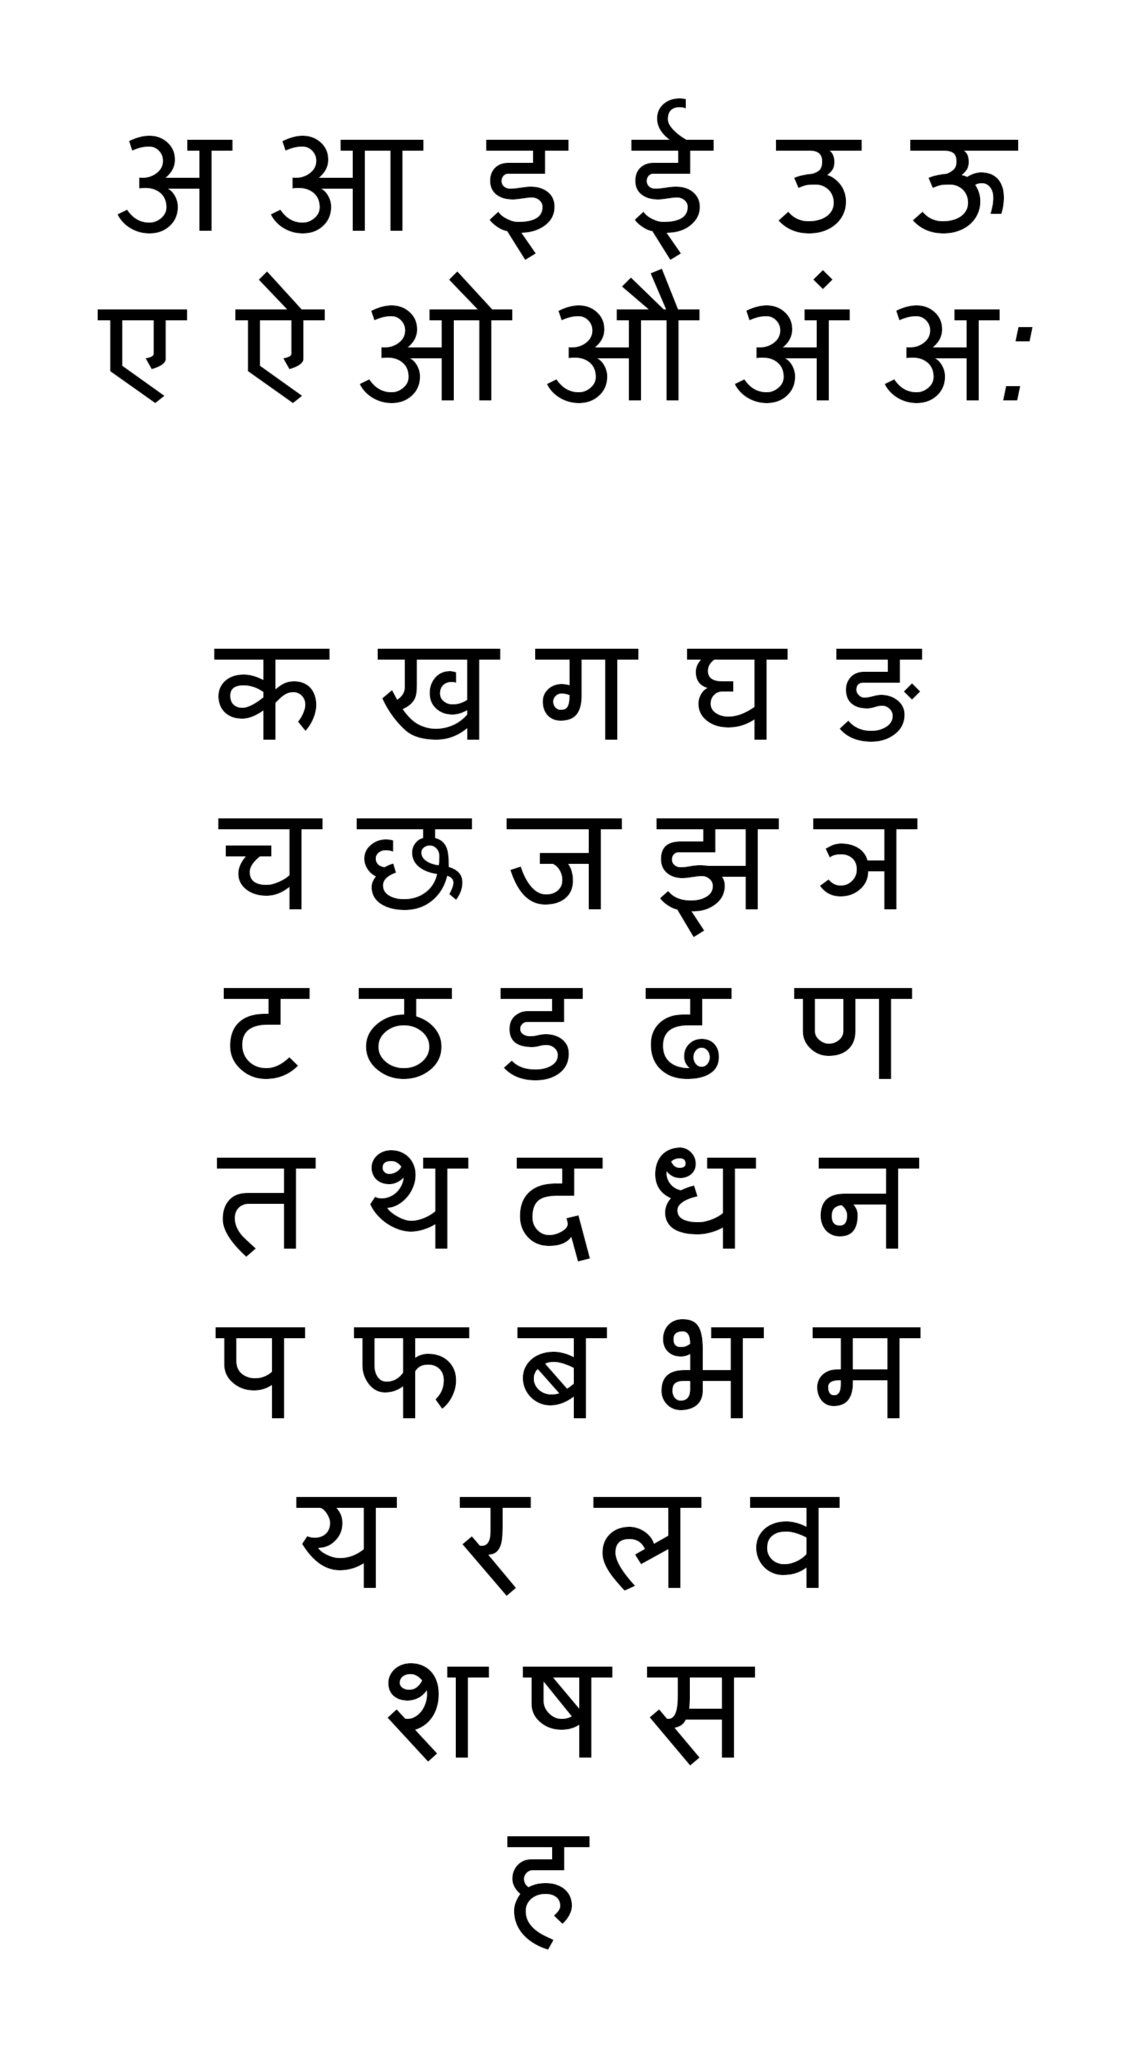 The Devanagari Script Nepalgo